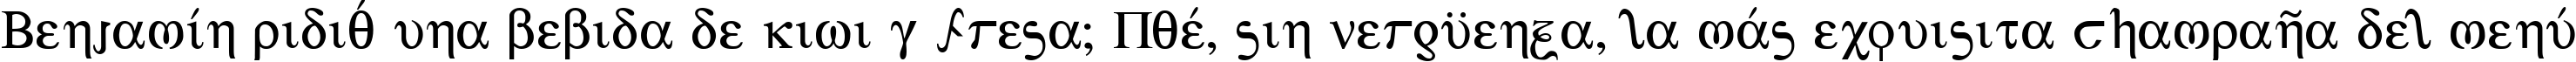 Пример написания шрифтом Achilles текста на испанском